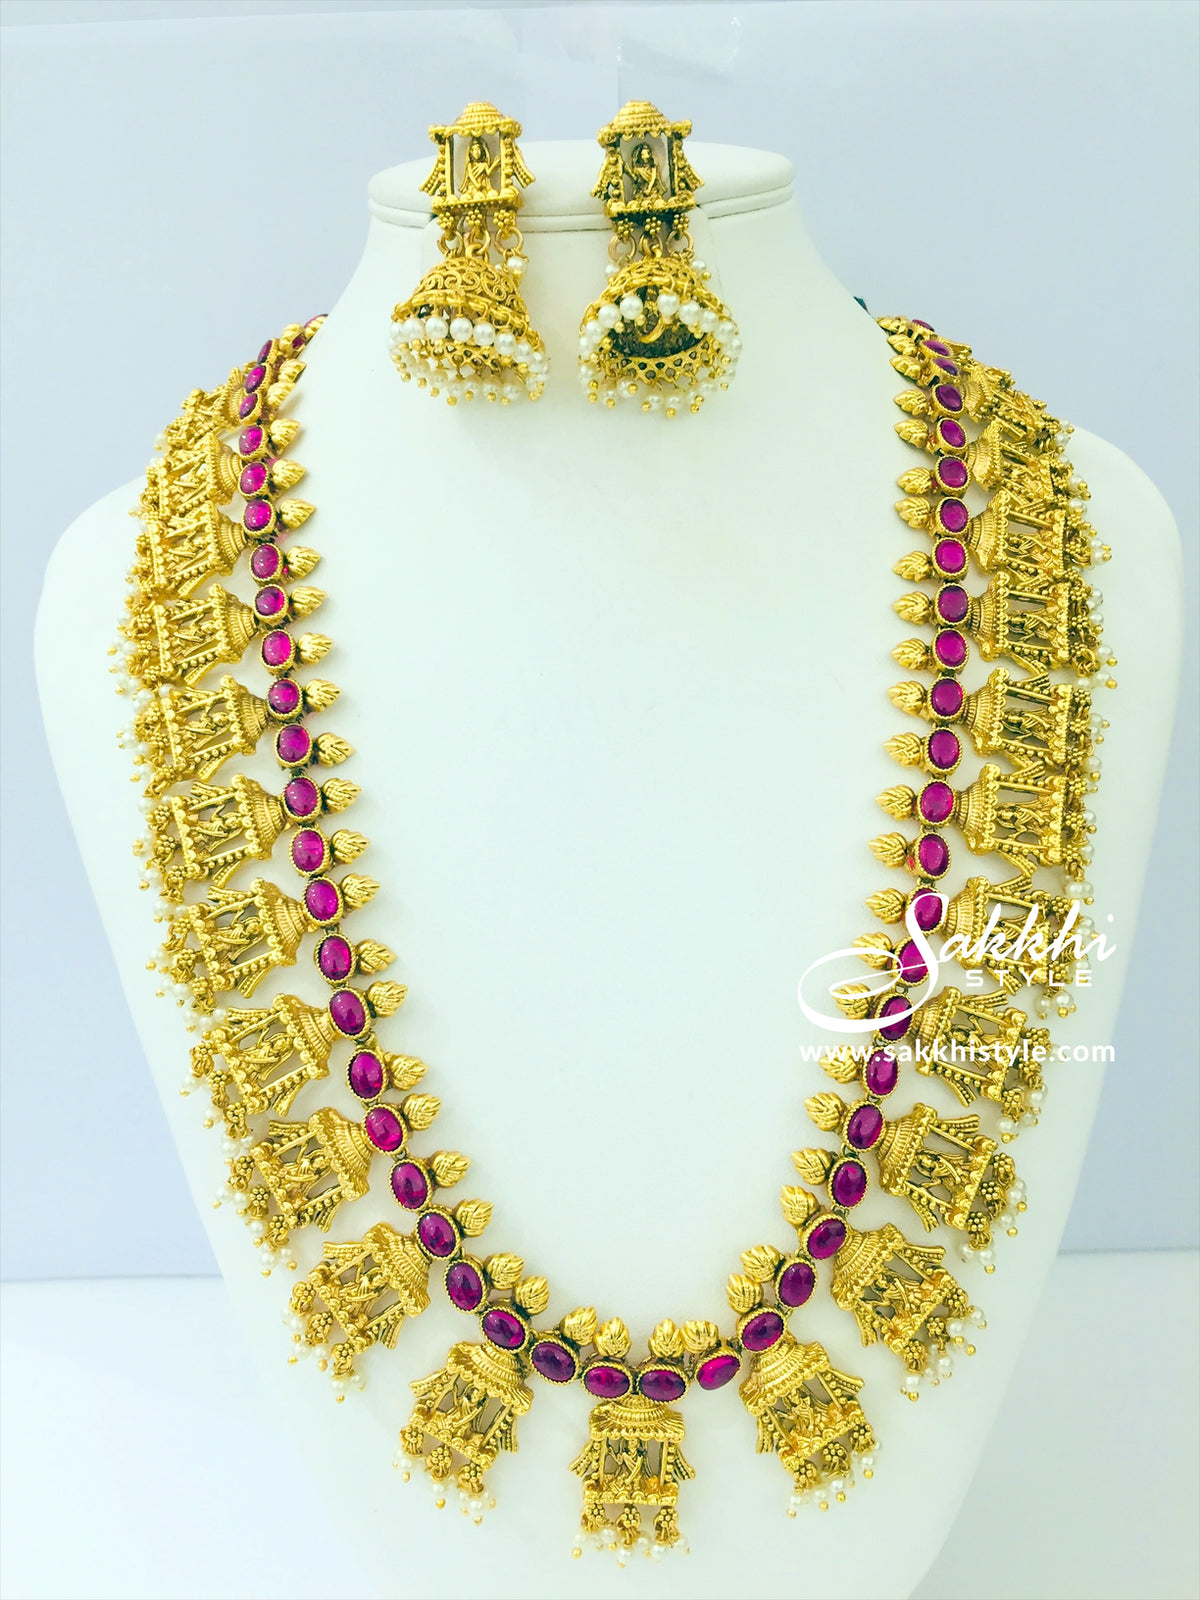 Antique Long Necklace Set - Sakkhi Style